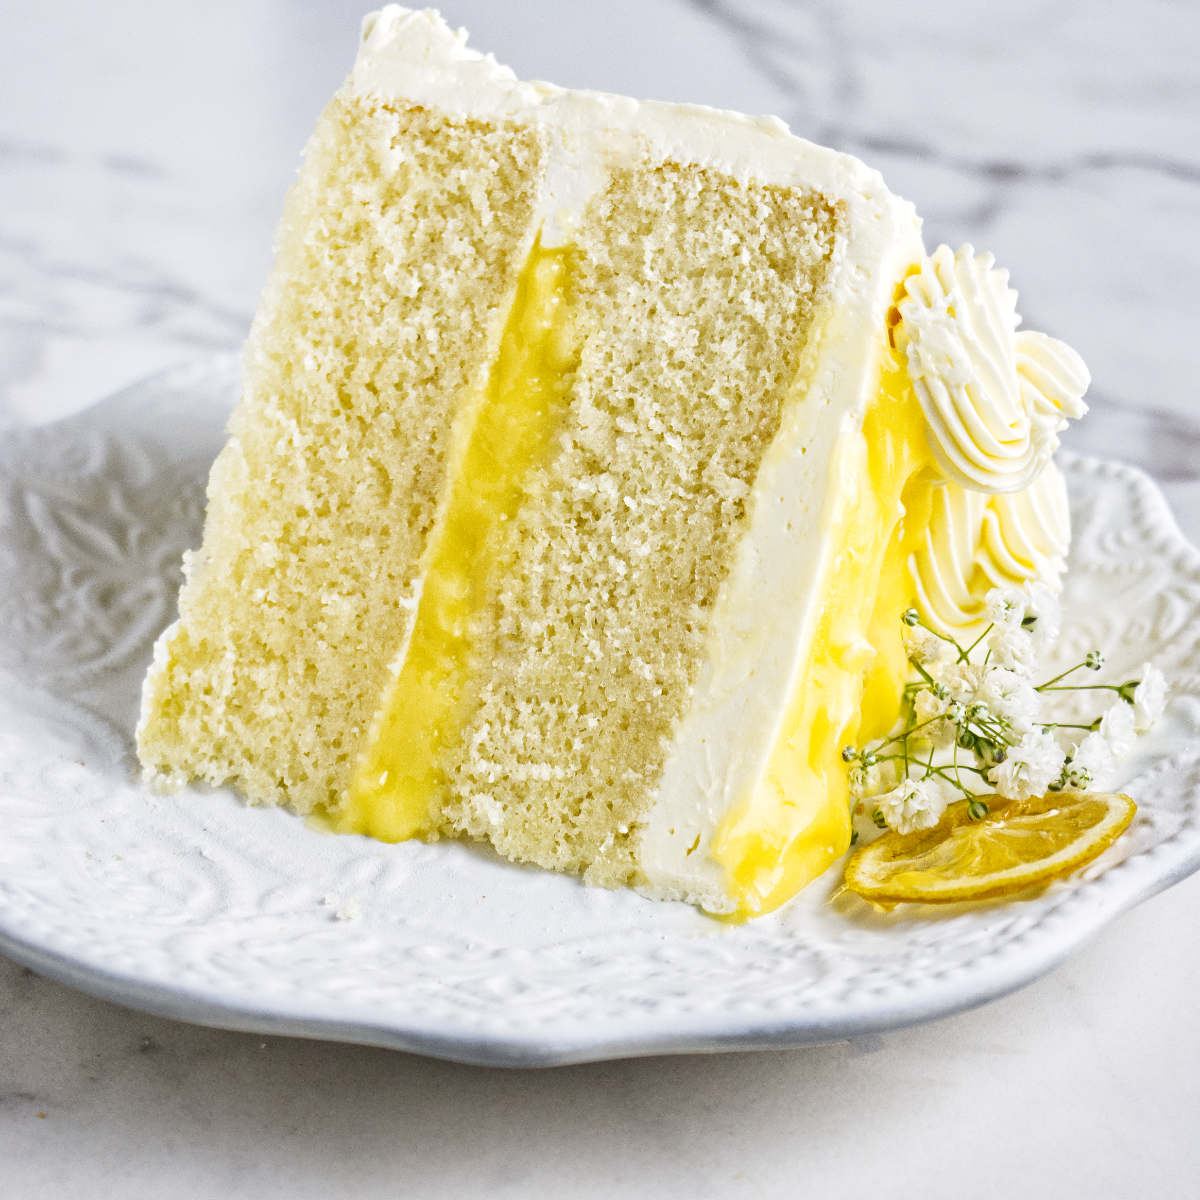 A slice of lemon curd cake on a plate.